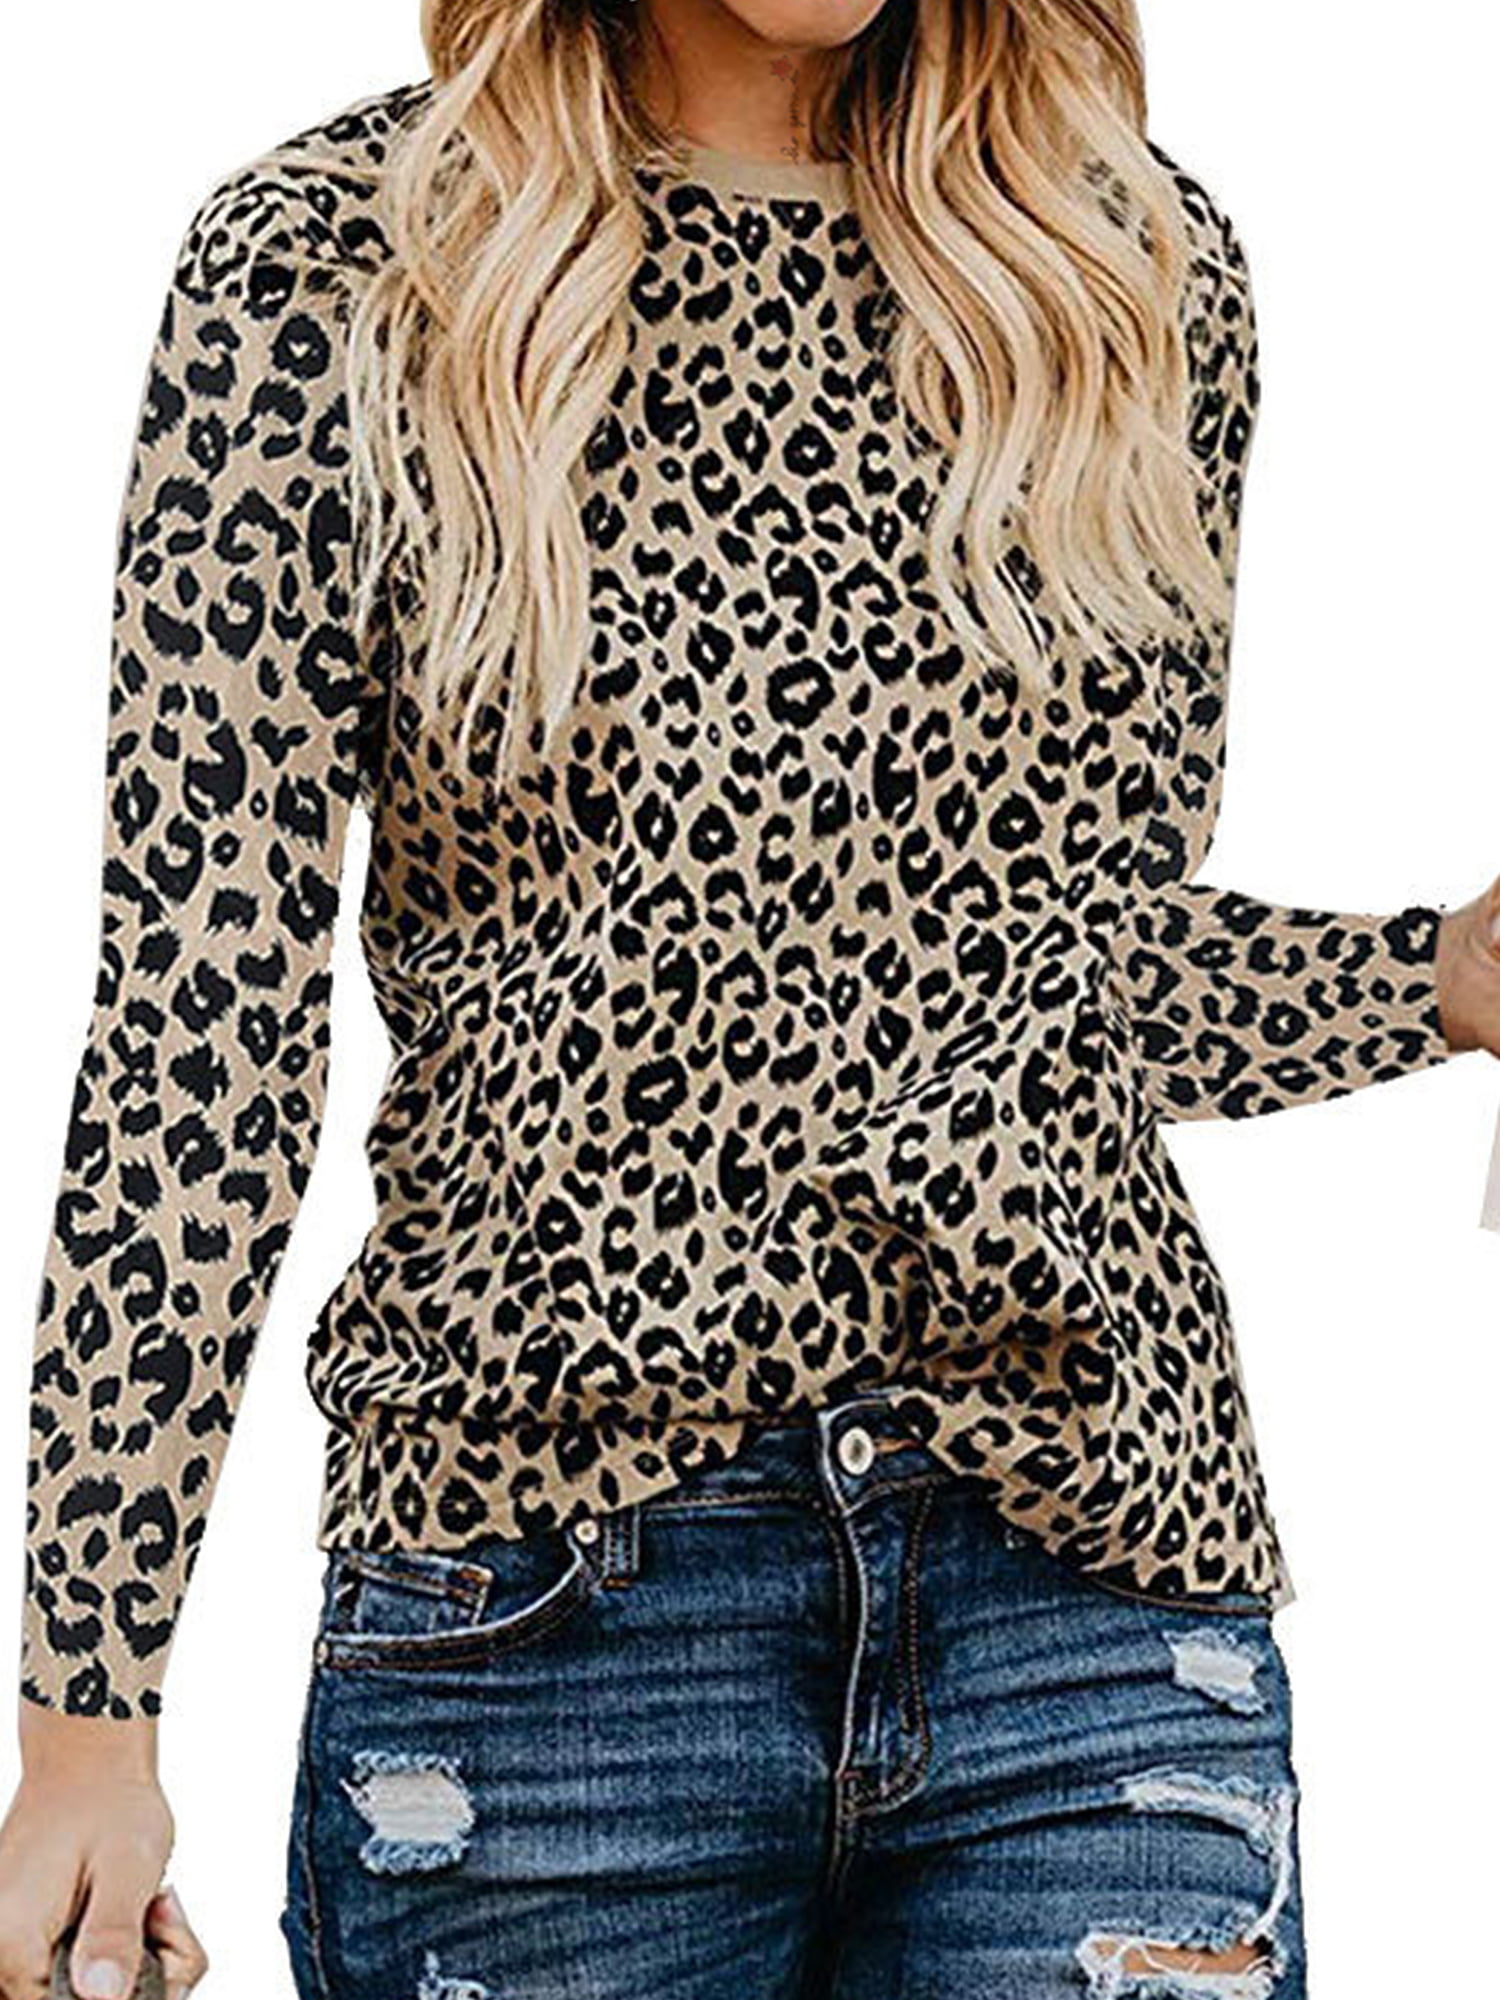 QUNANEN Womens Tops Leopard Blouse Long Sleeve Fashion Ladies T-Shirt Oversize Tops